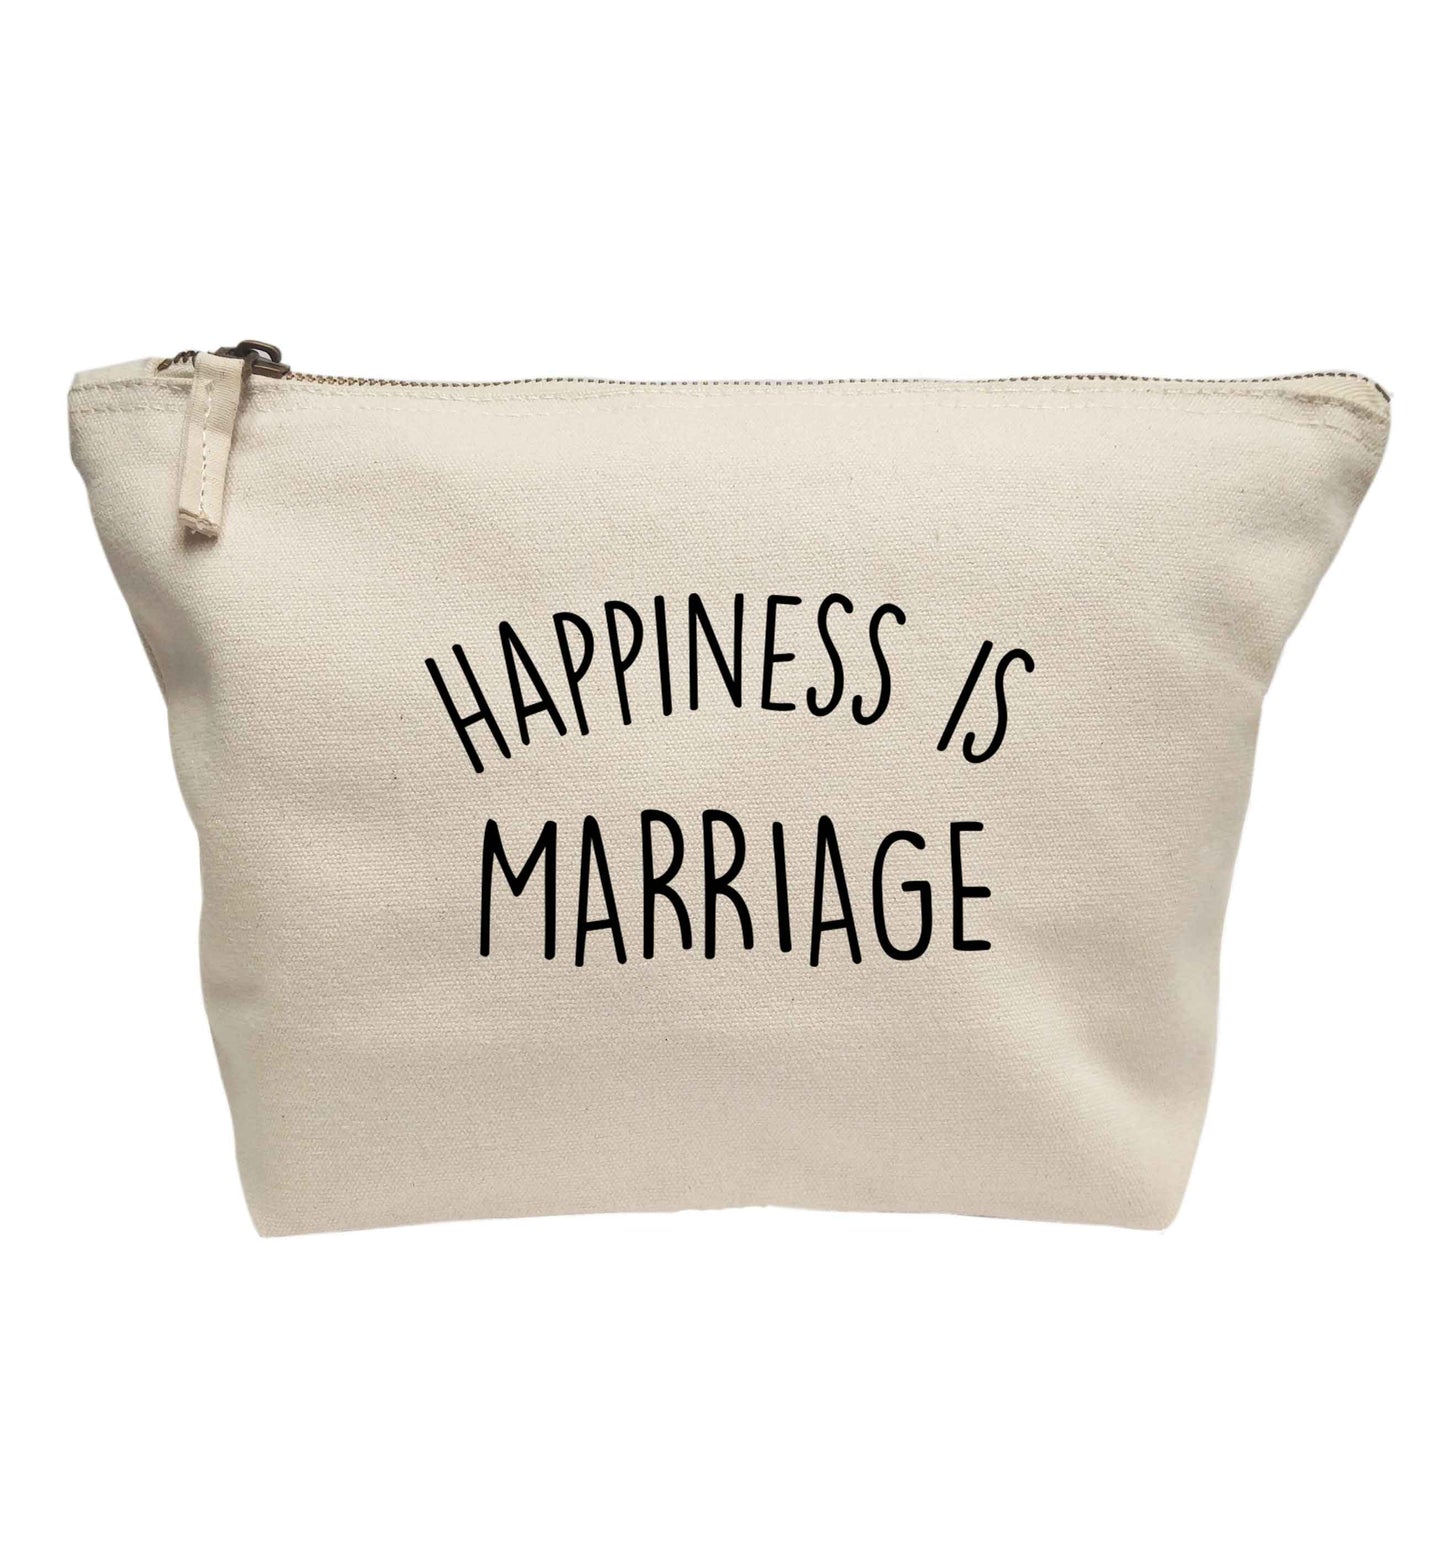 Happiness is wedding planning | Makeup / wash bag